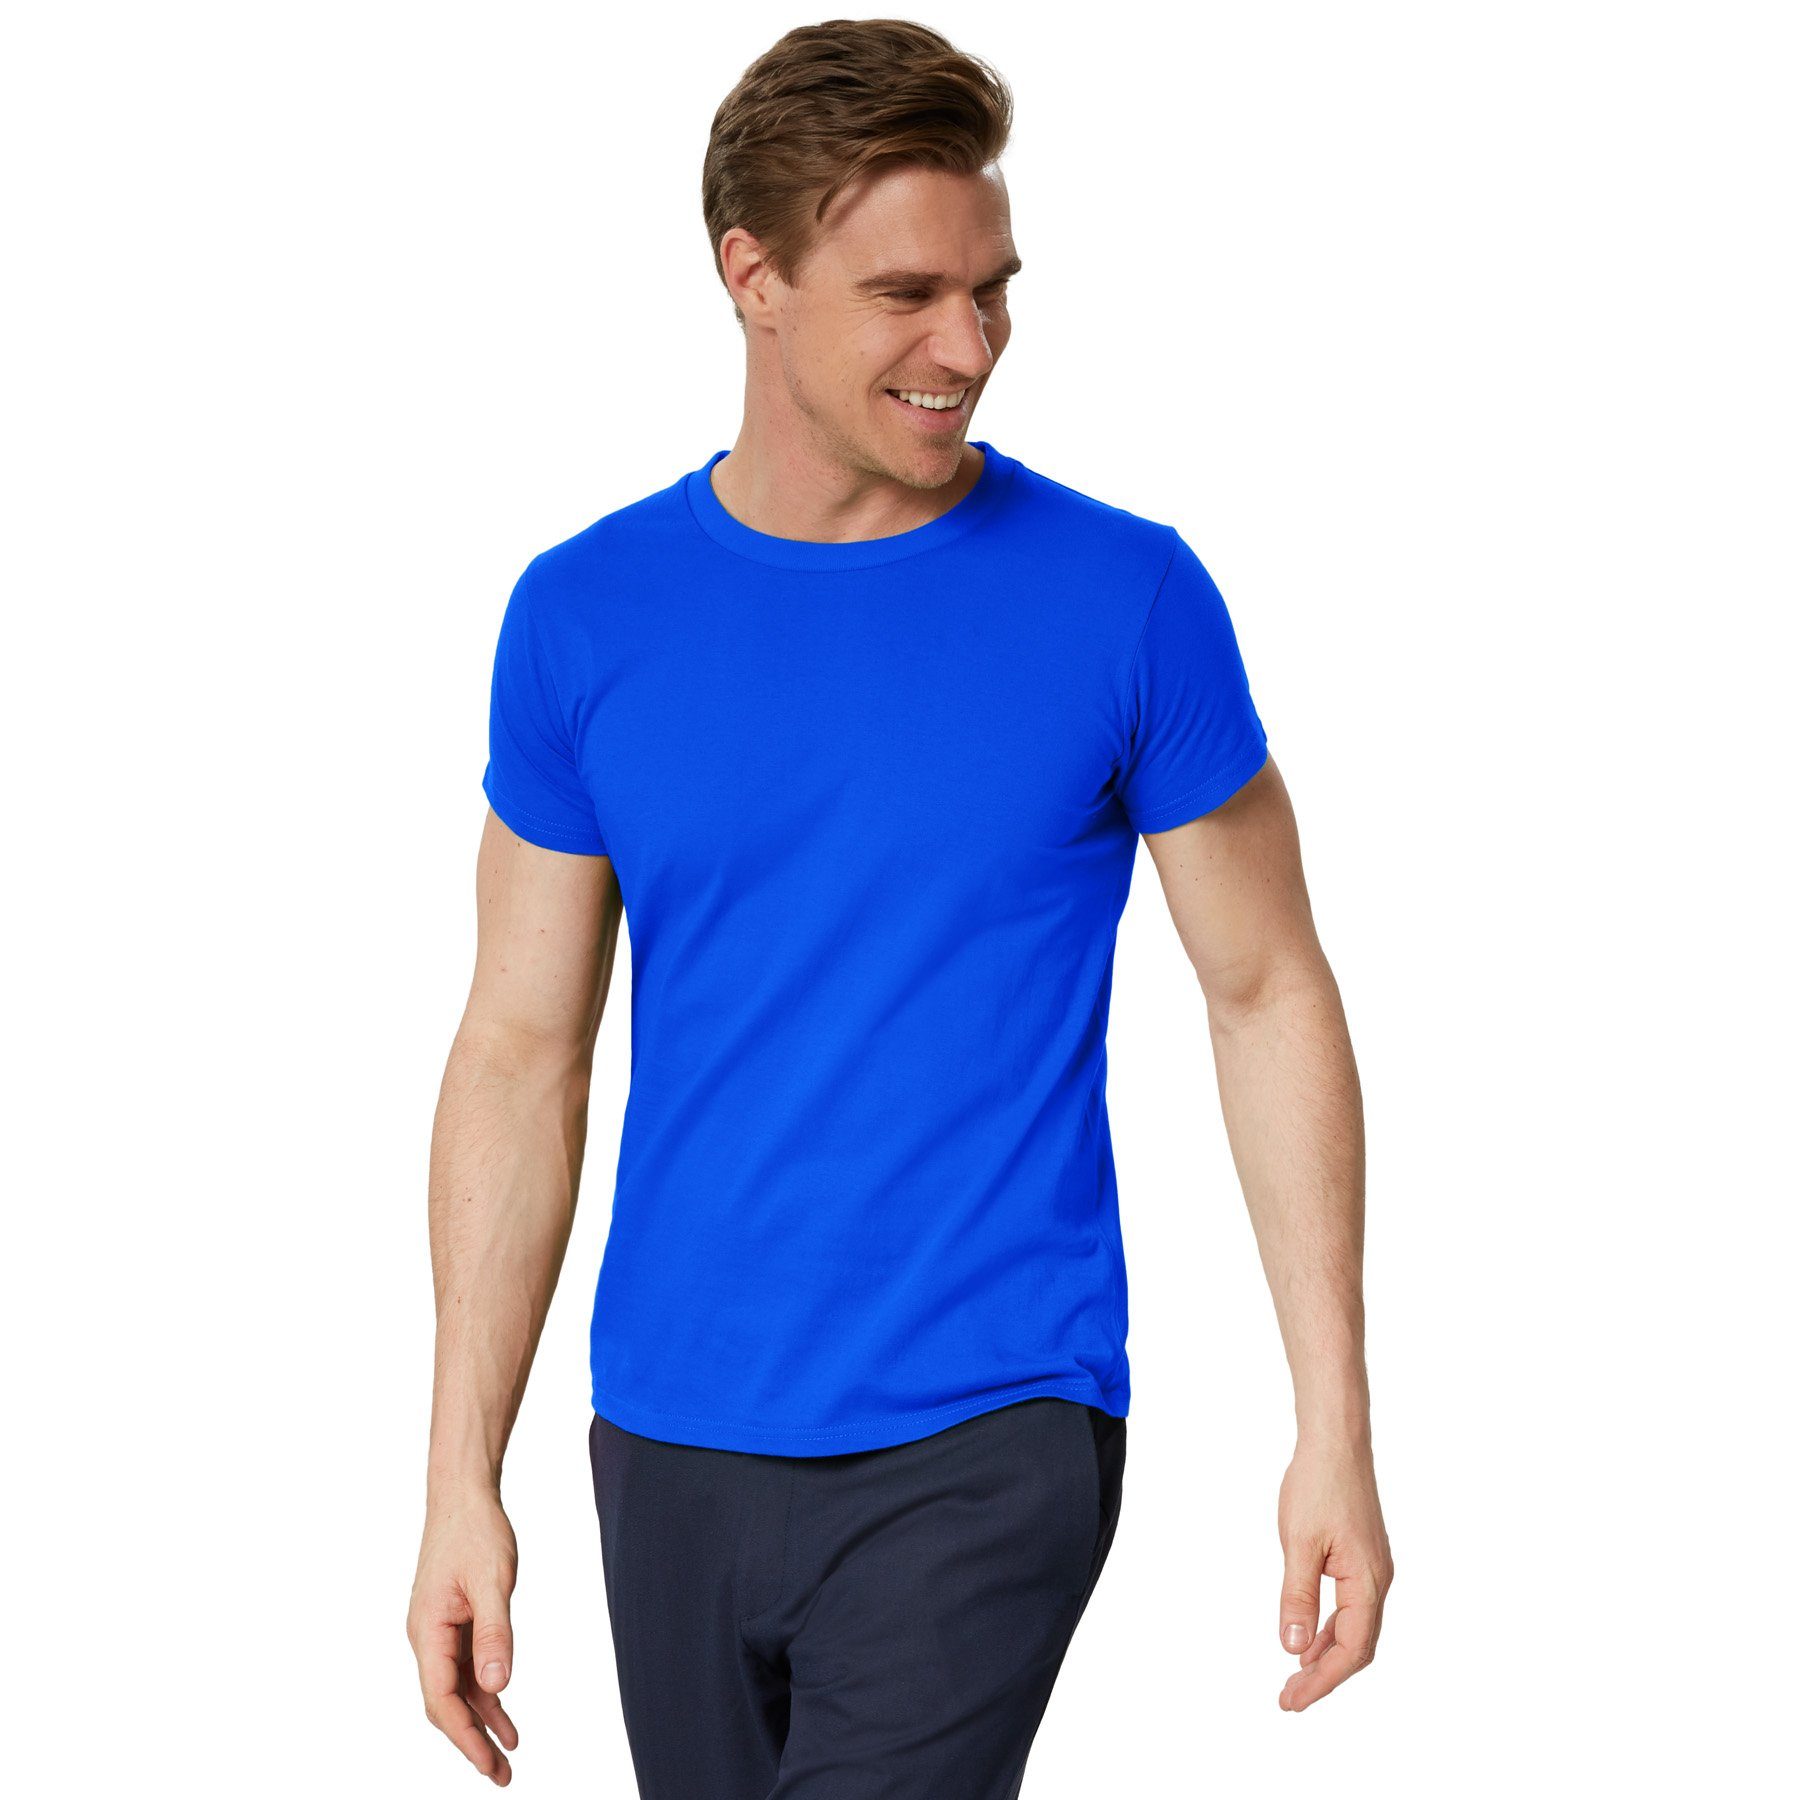 dressforfun T-Shirt T-Shirt Männer Rundhals blau